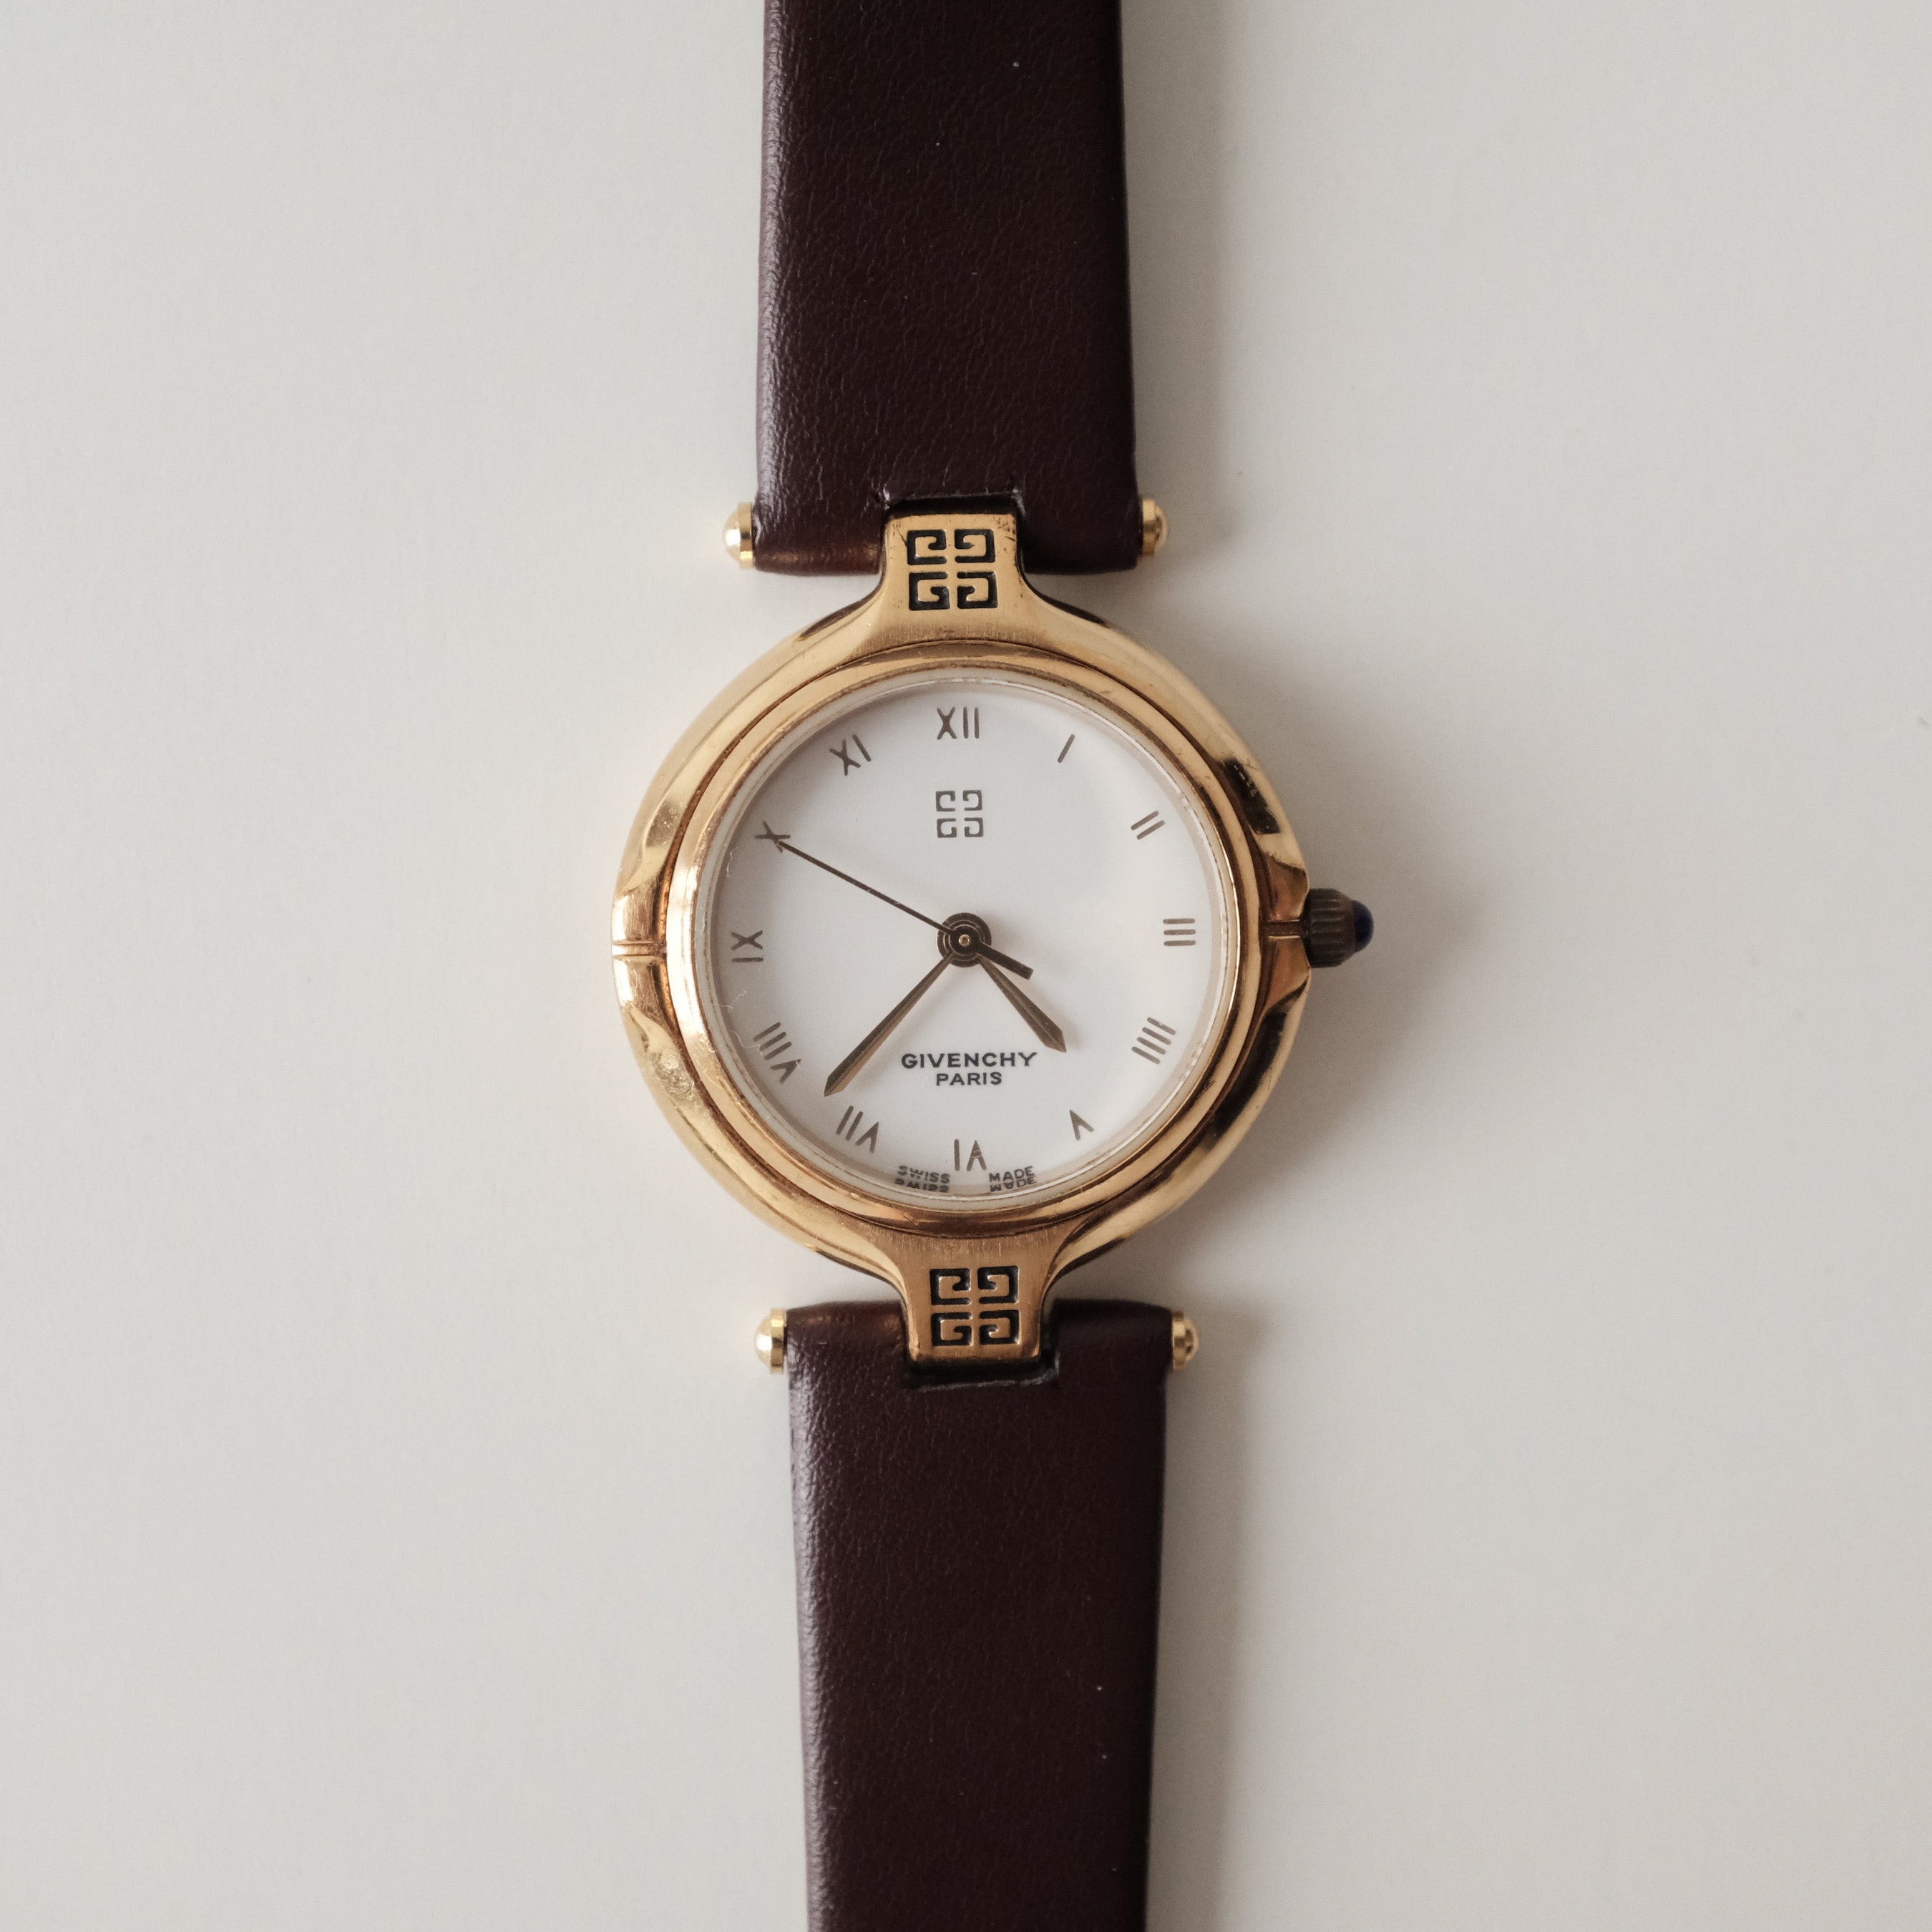 GIVENCHY PARIS WRIST WATCH. Clocks & Watches - Wristwatches - Auctionet